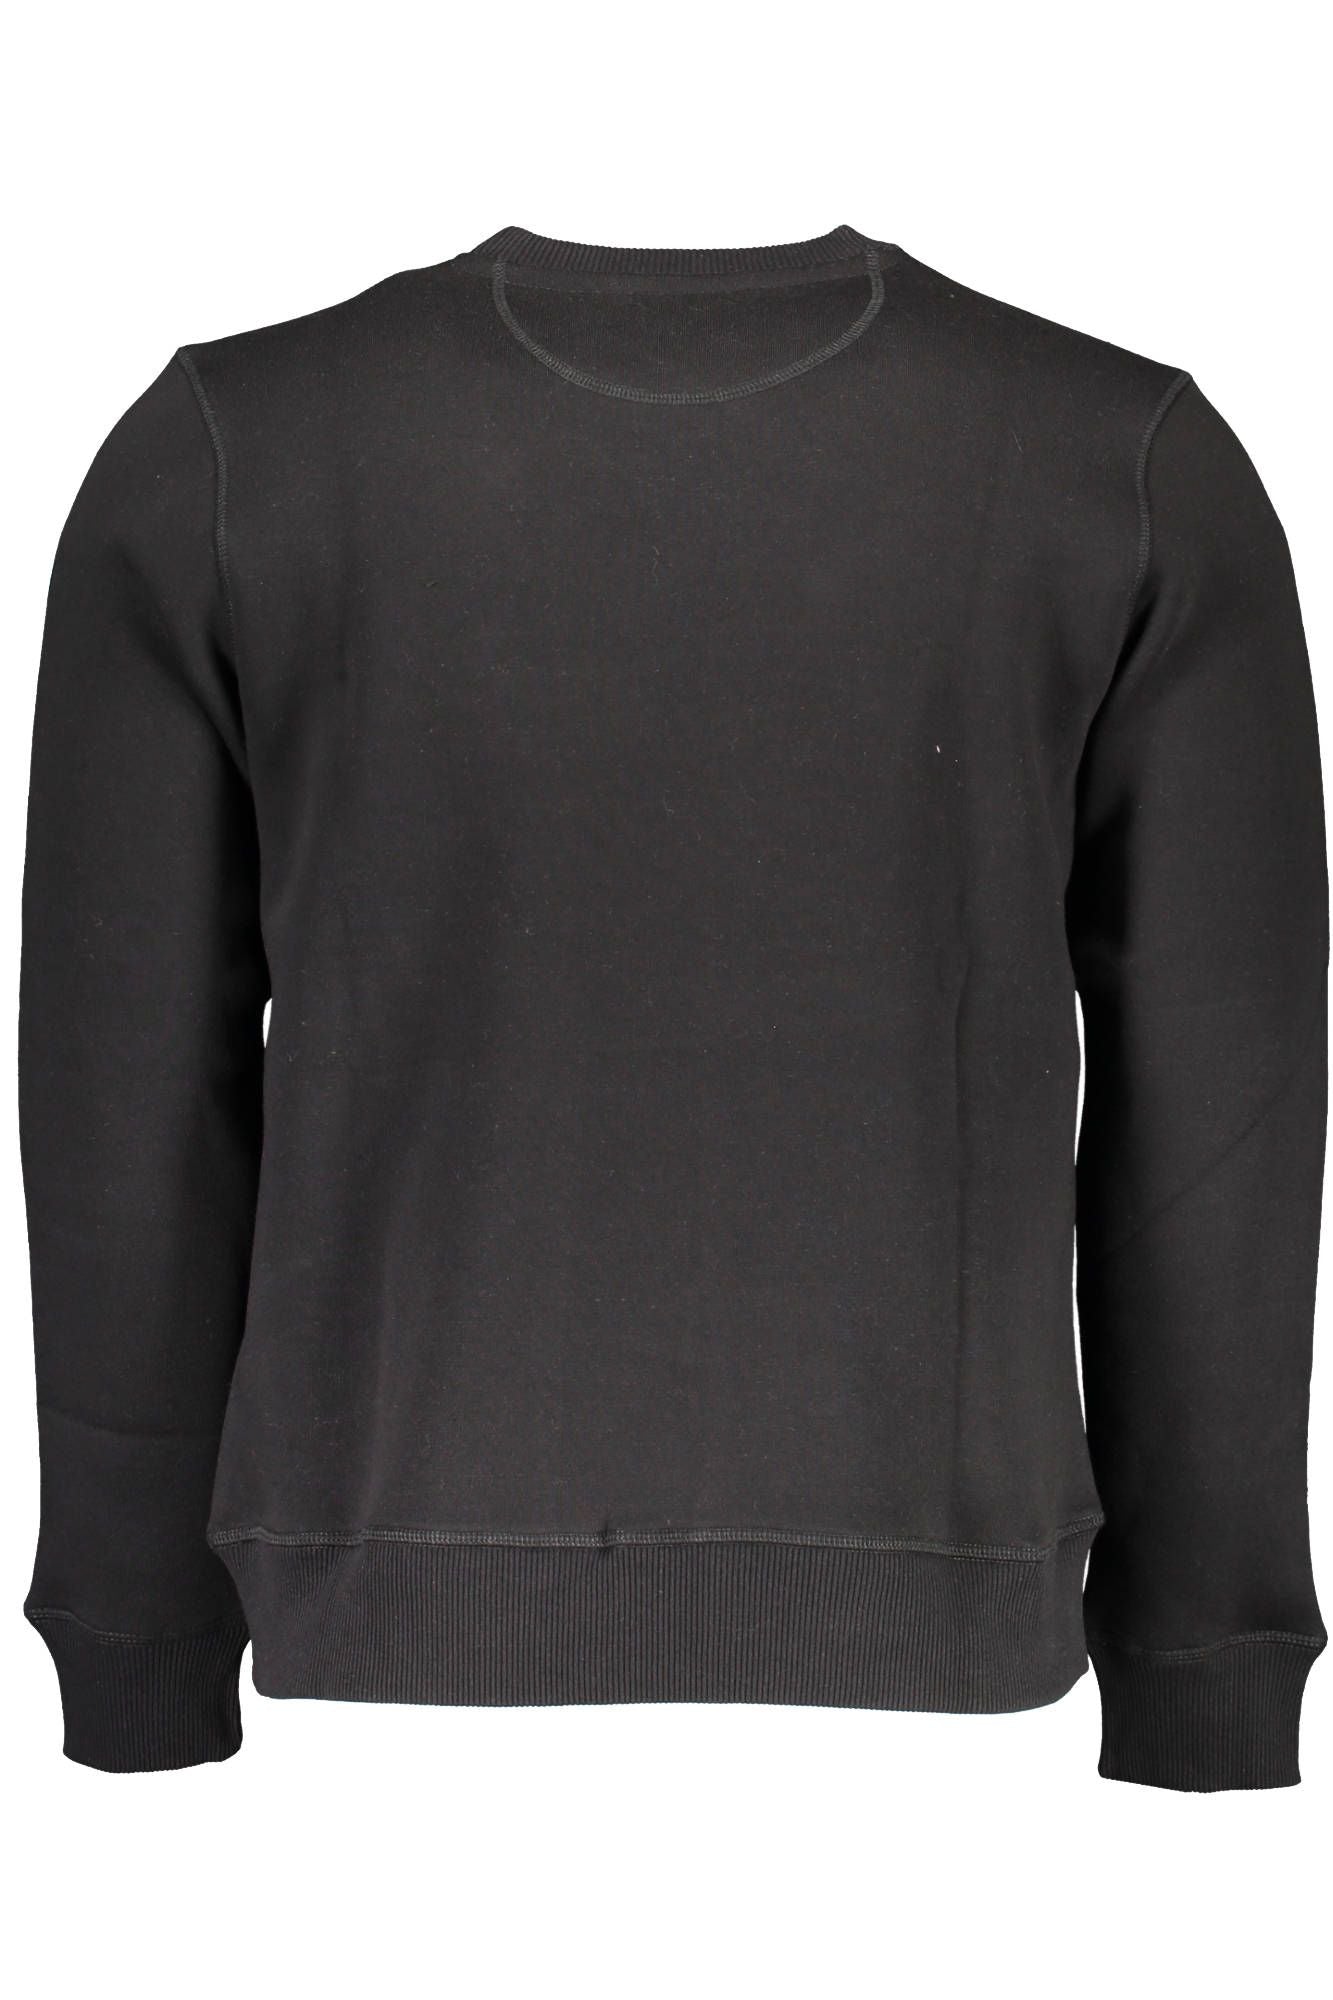 Sleek Black Cotton Sweatshirt with Logo